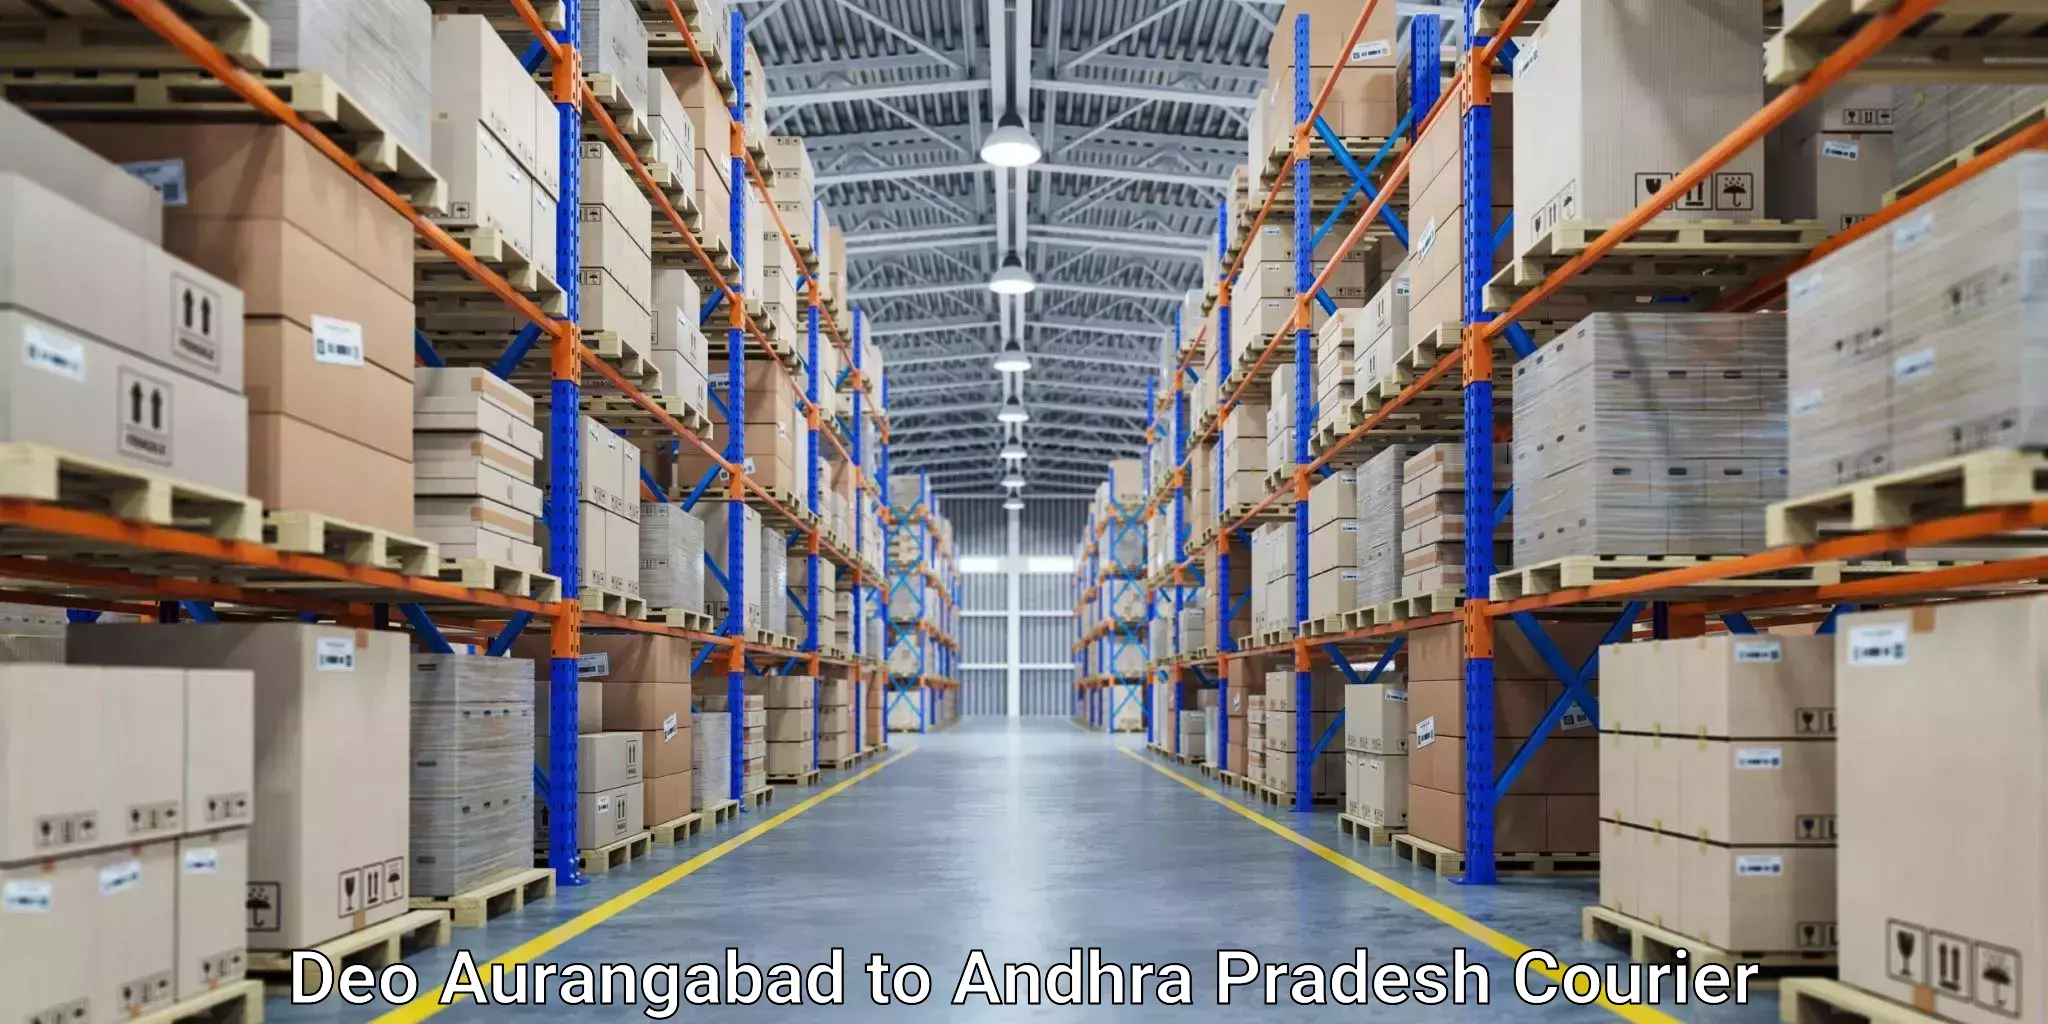 Bulk courier orders Deo Aurangabad to Andhra Pradesh